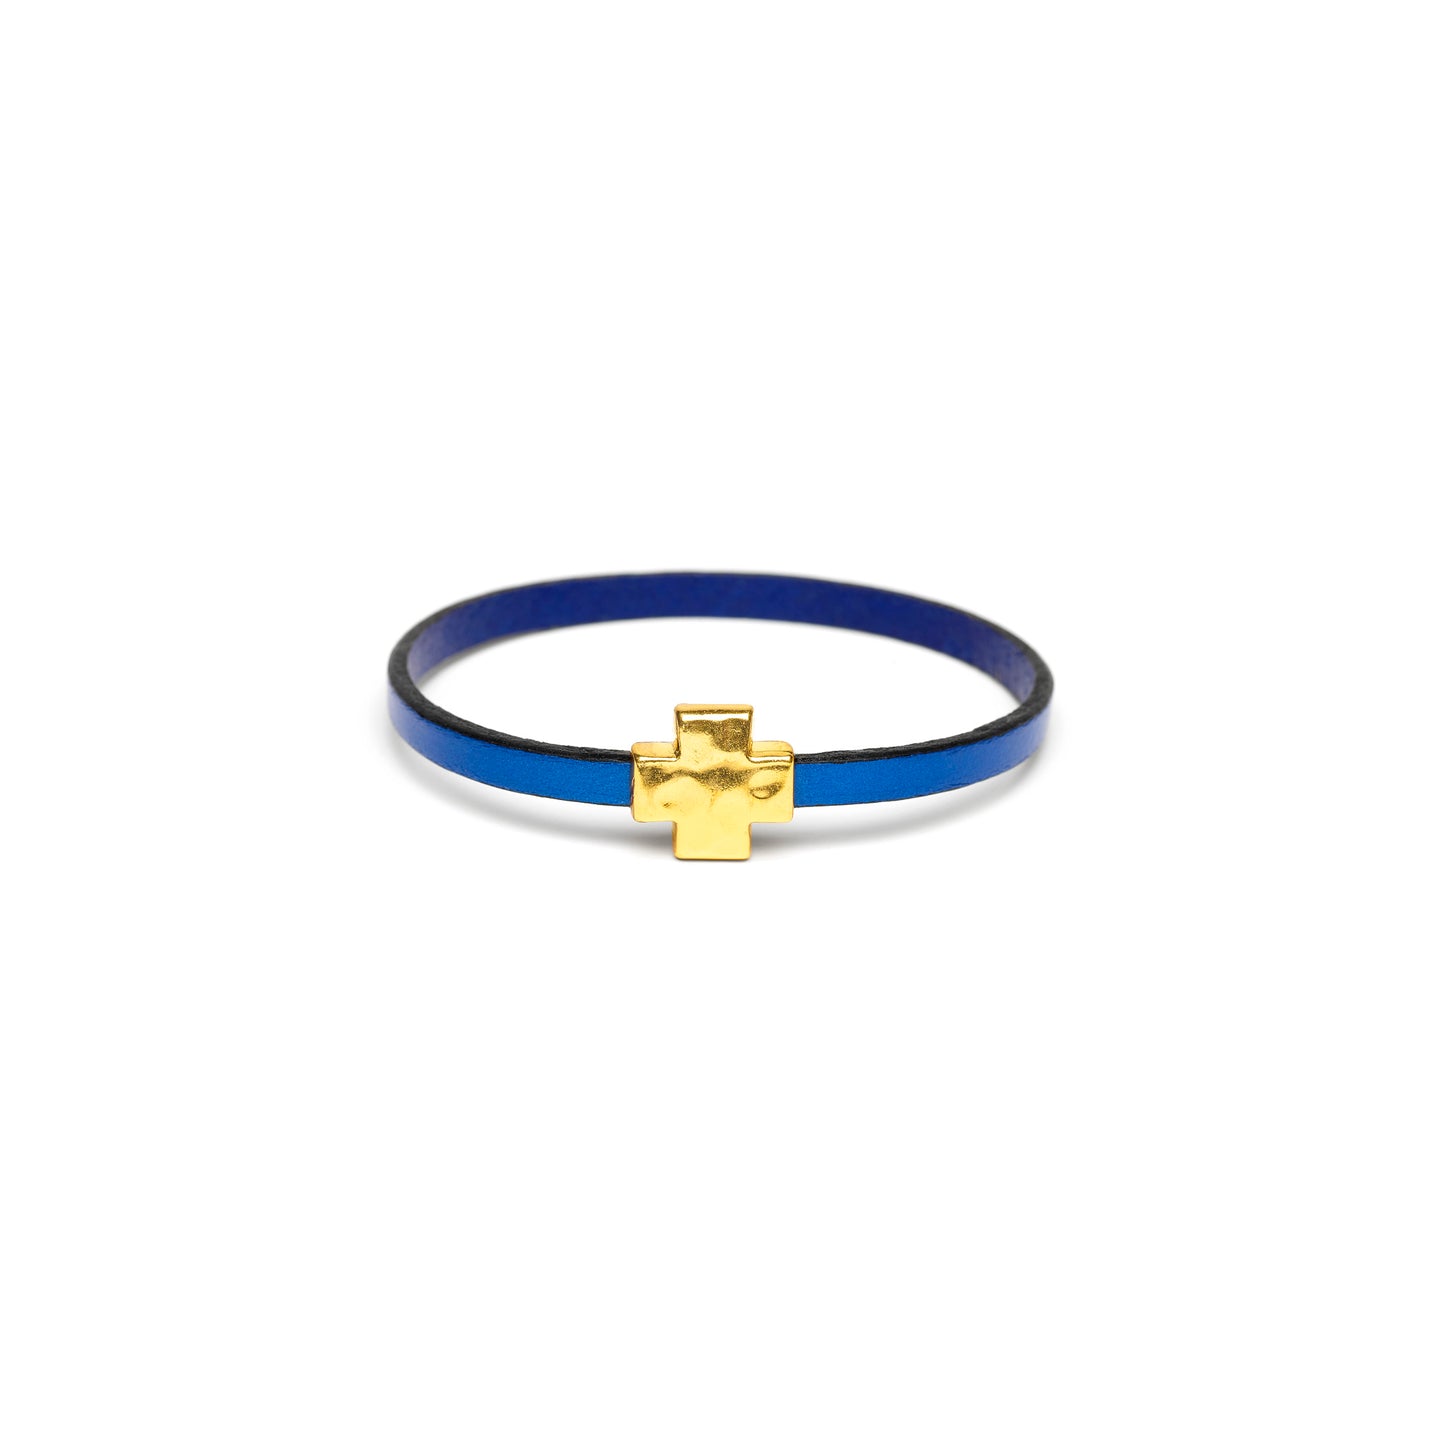 "Wrap it Up Bracelet" with Gold Cross - Single Length - Electric Blue